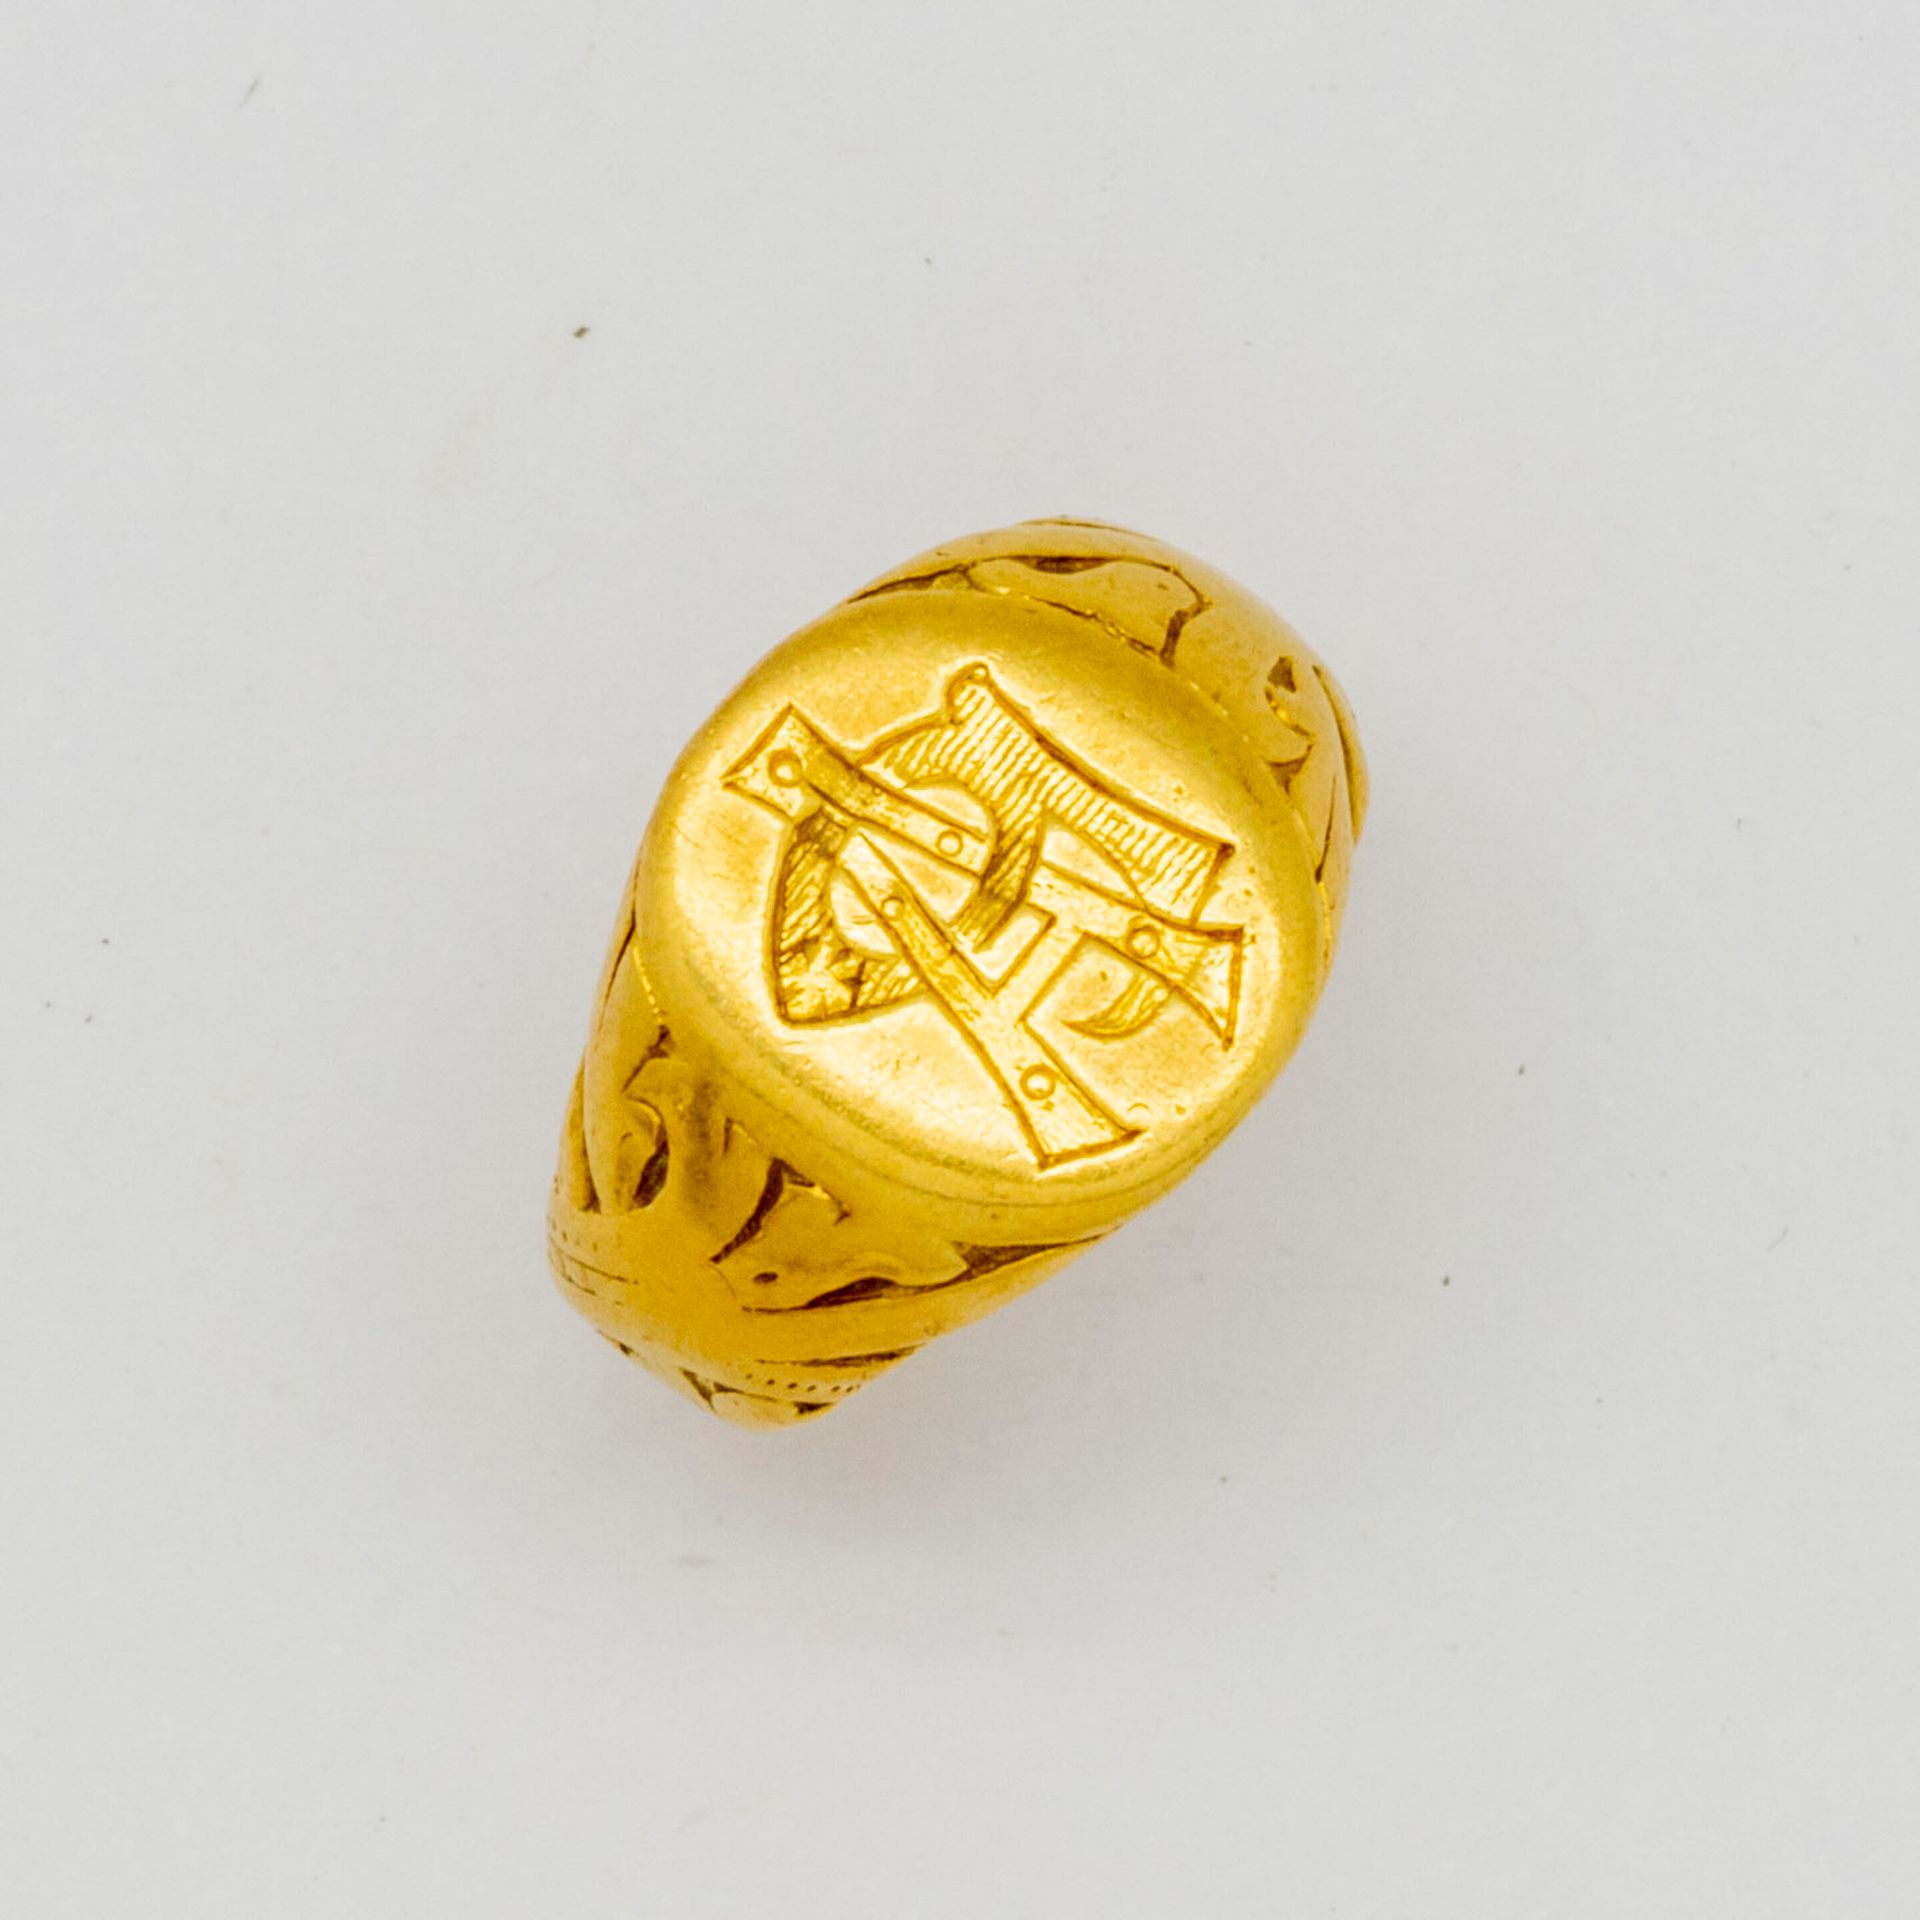 Null Chevalière en or jaune monogrammée AP

TDD : 51

Poids : 9,92 g.